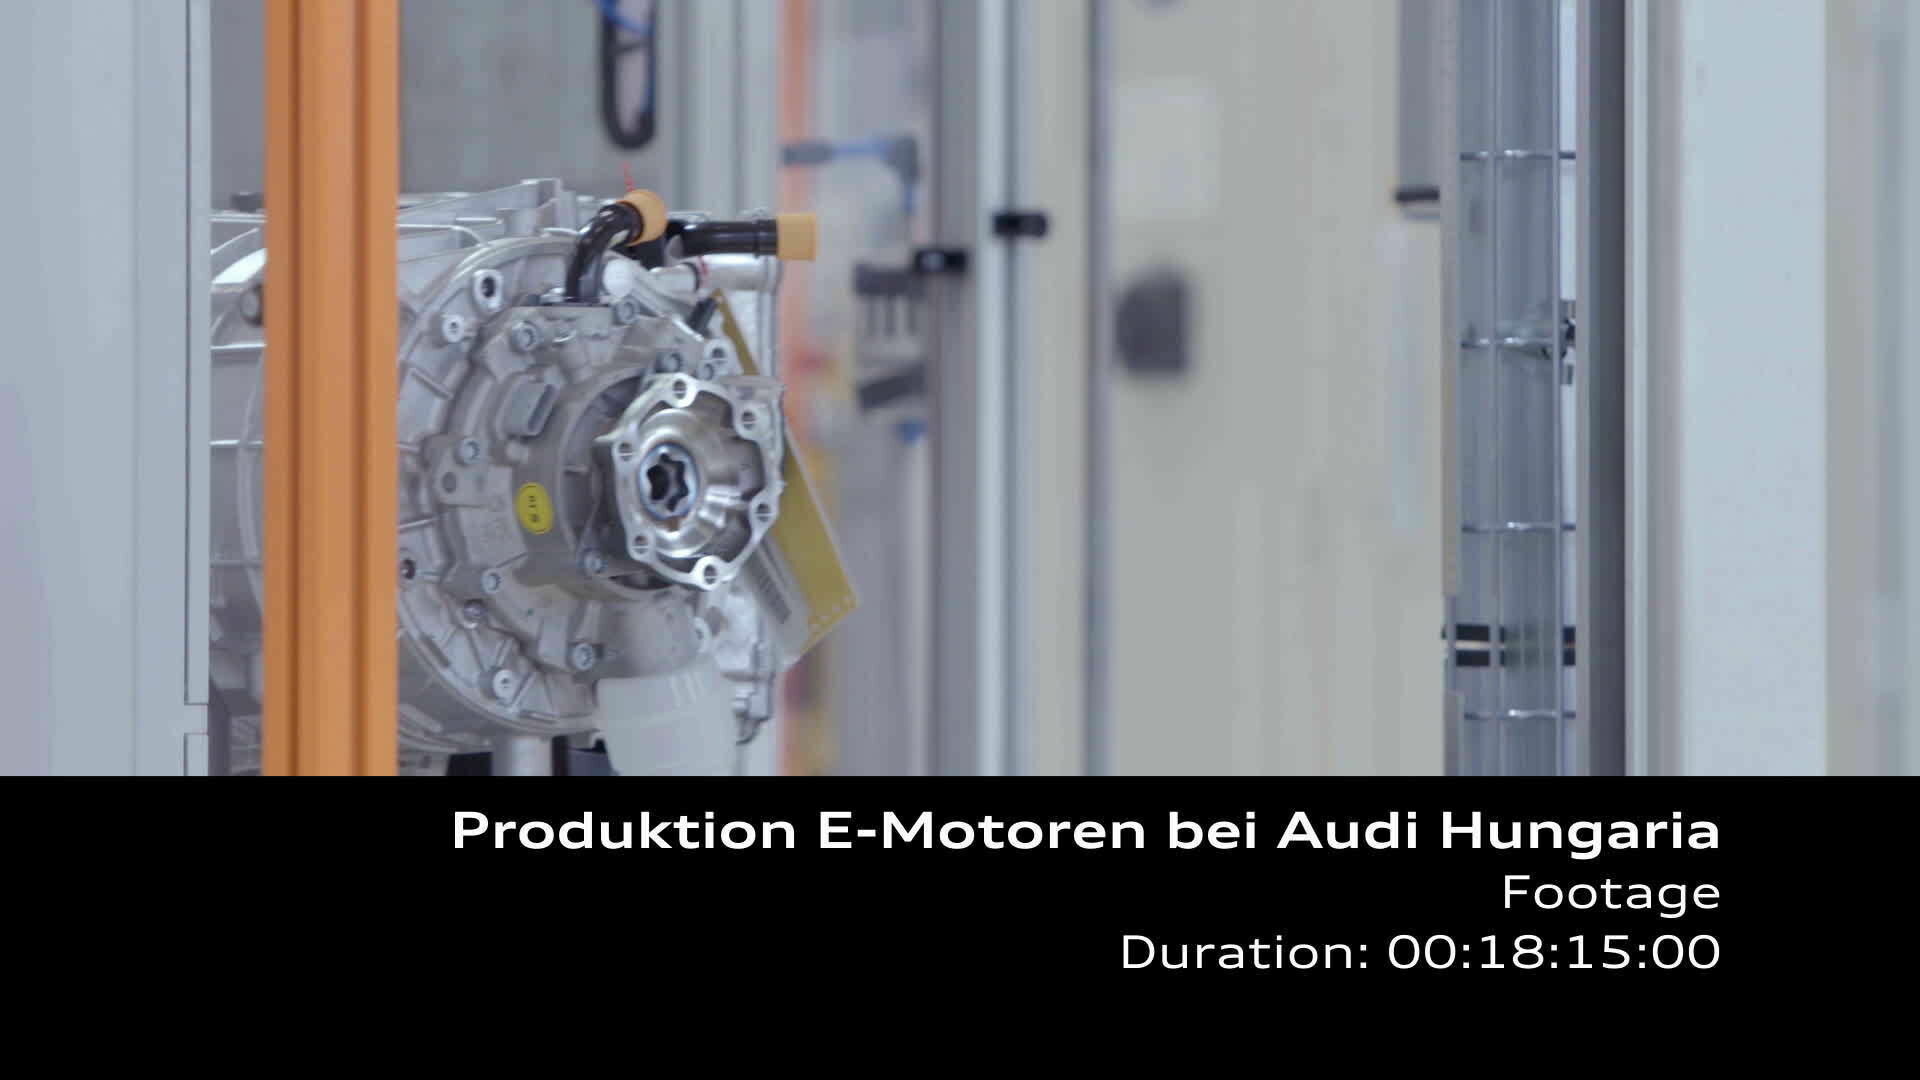 Audi Hungaria startet Serienproduktion von Elektromotoren